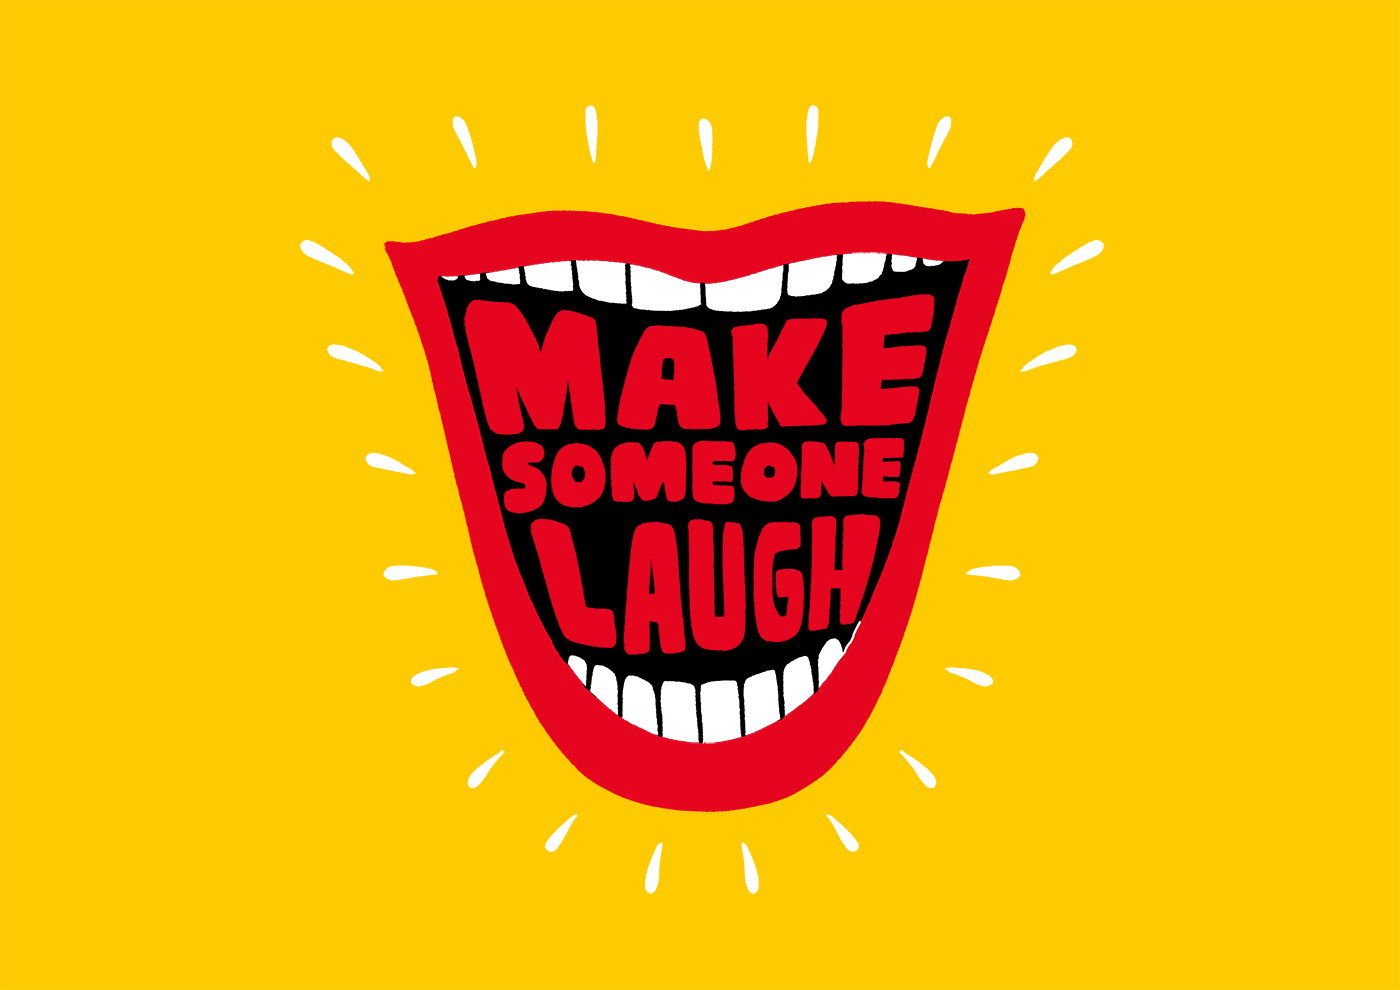 Make someone laugh